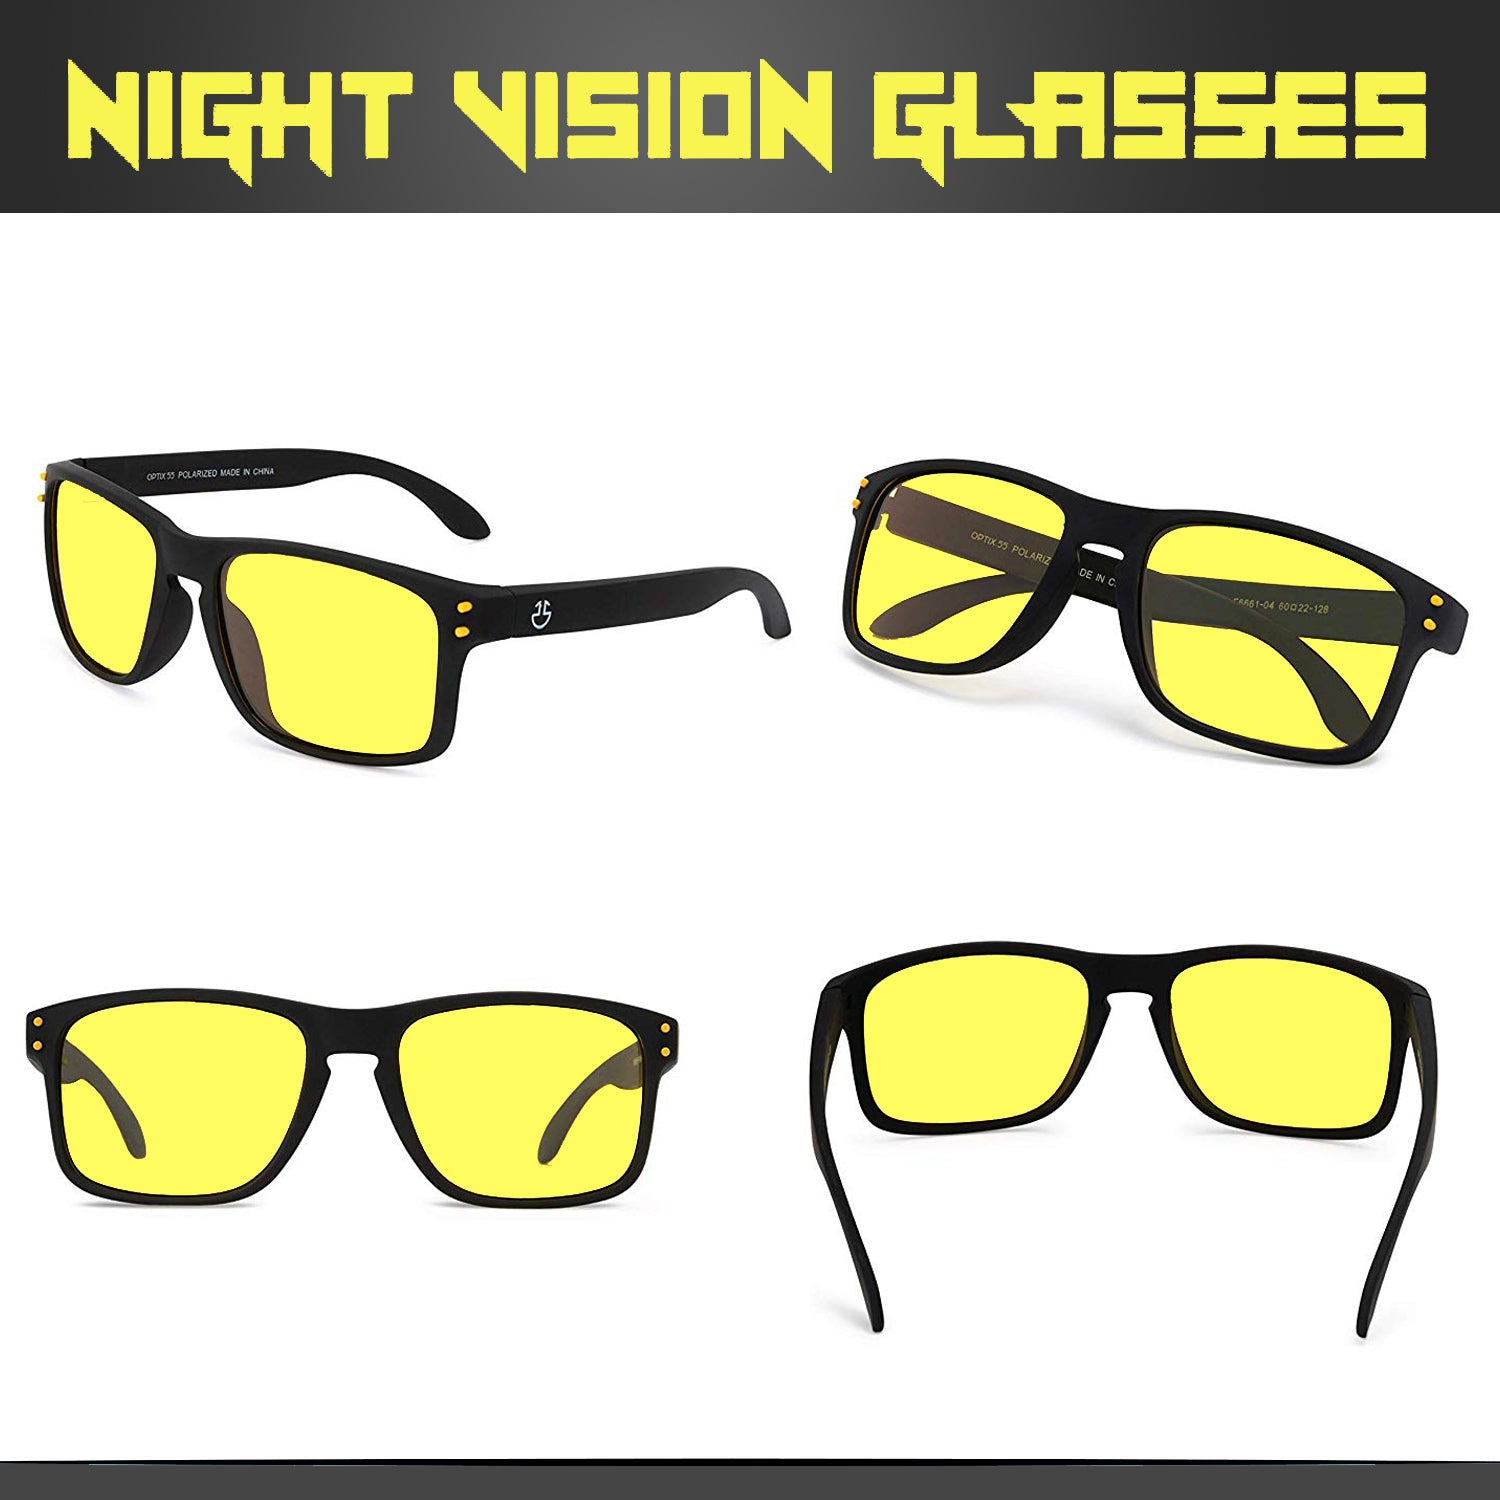 Sport Night Vision Glasses